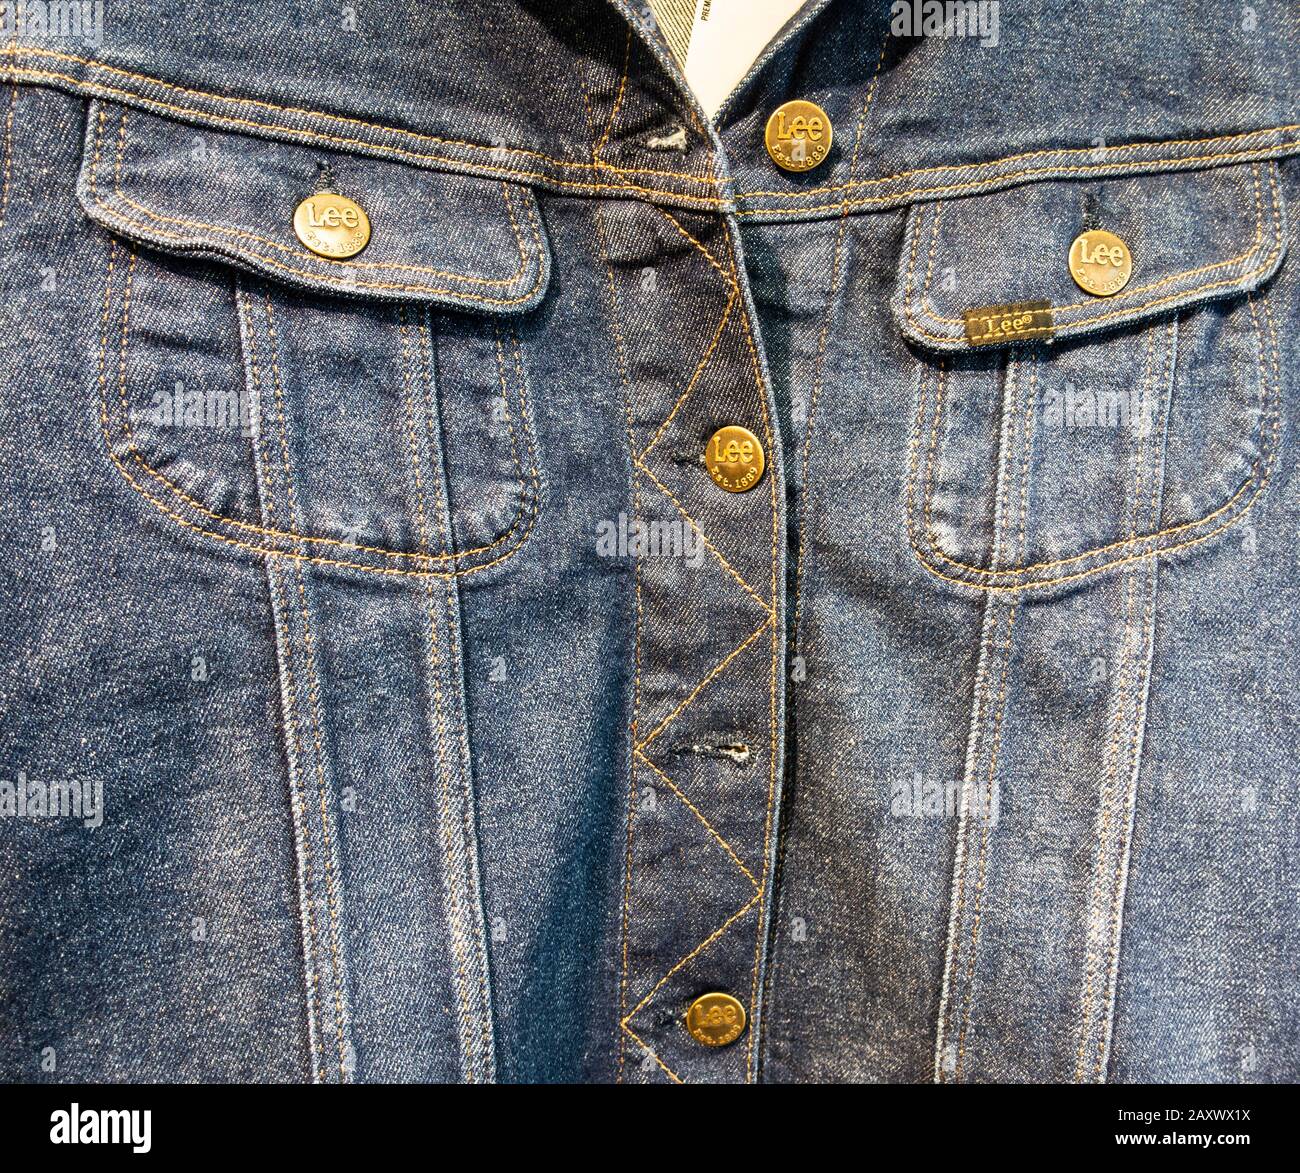 Lee Cooper denim jacket Stock Photo - Alamy